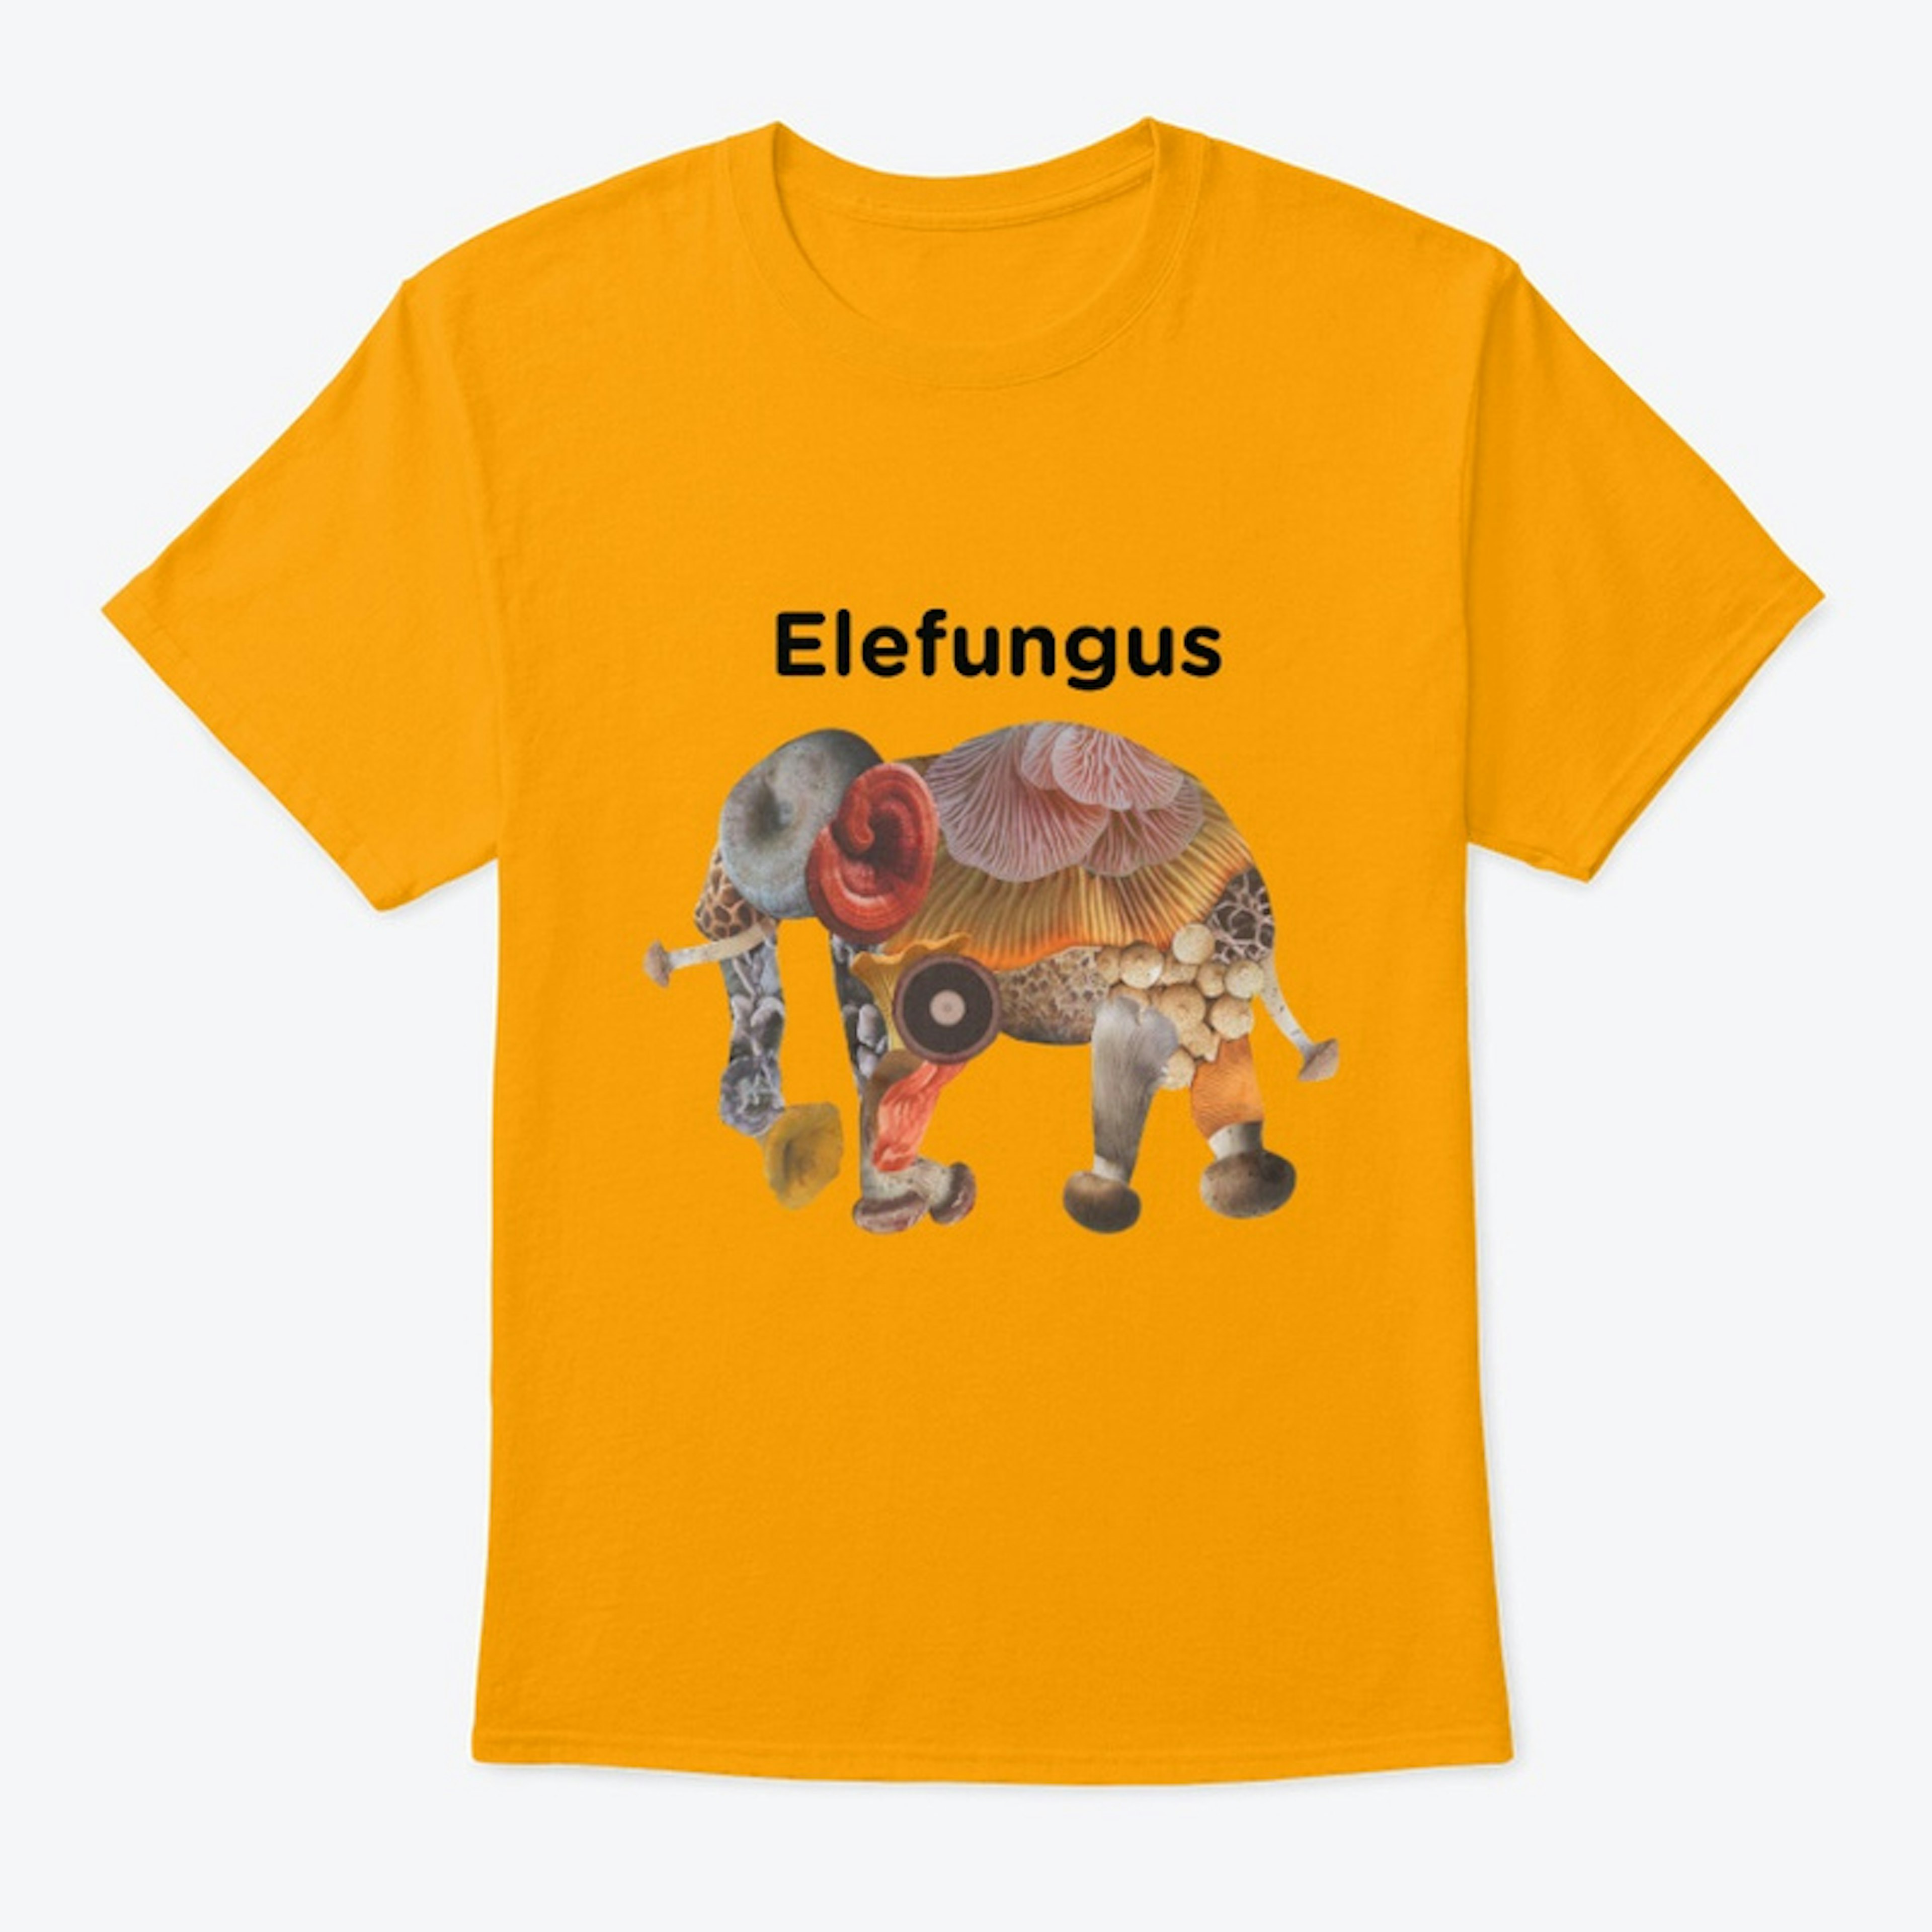 Elefungus